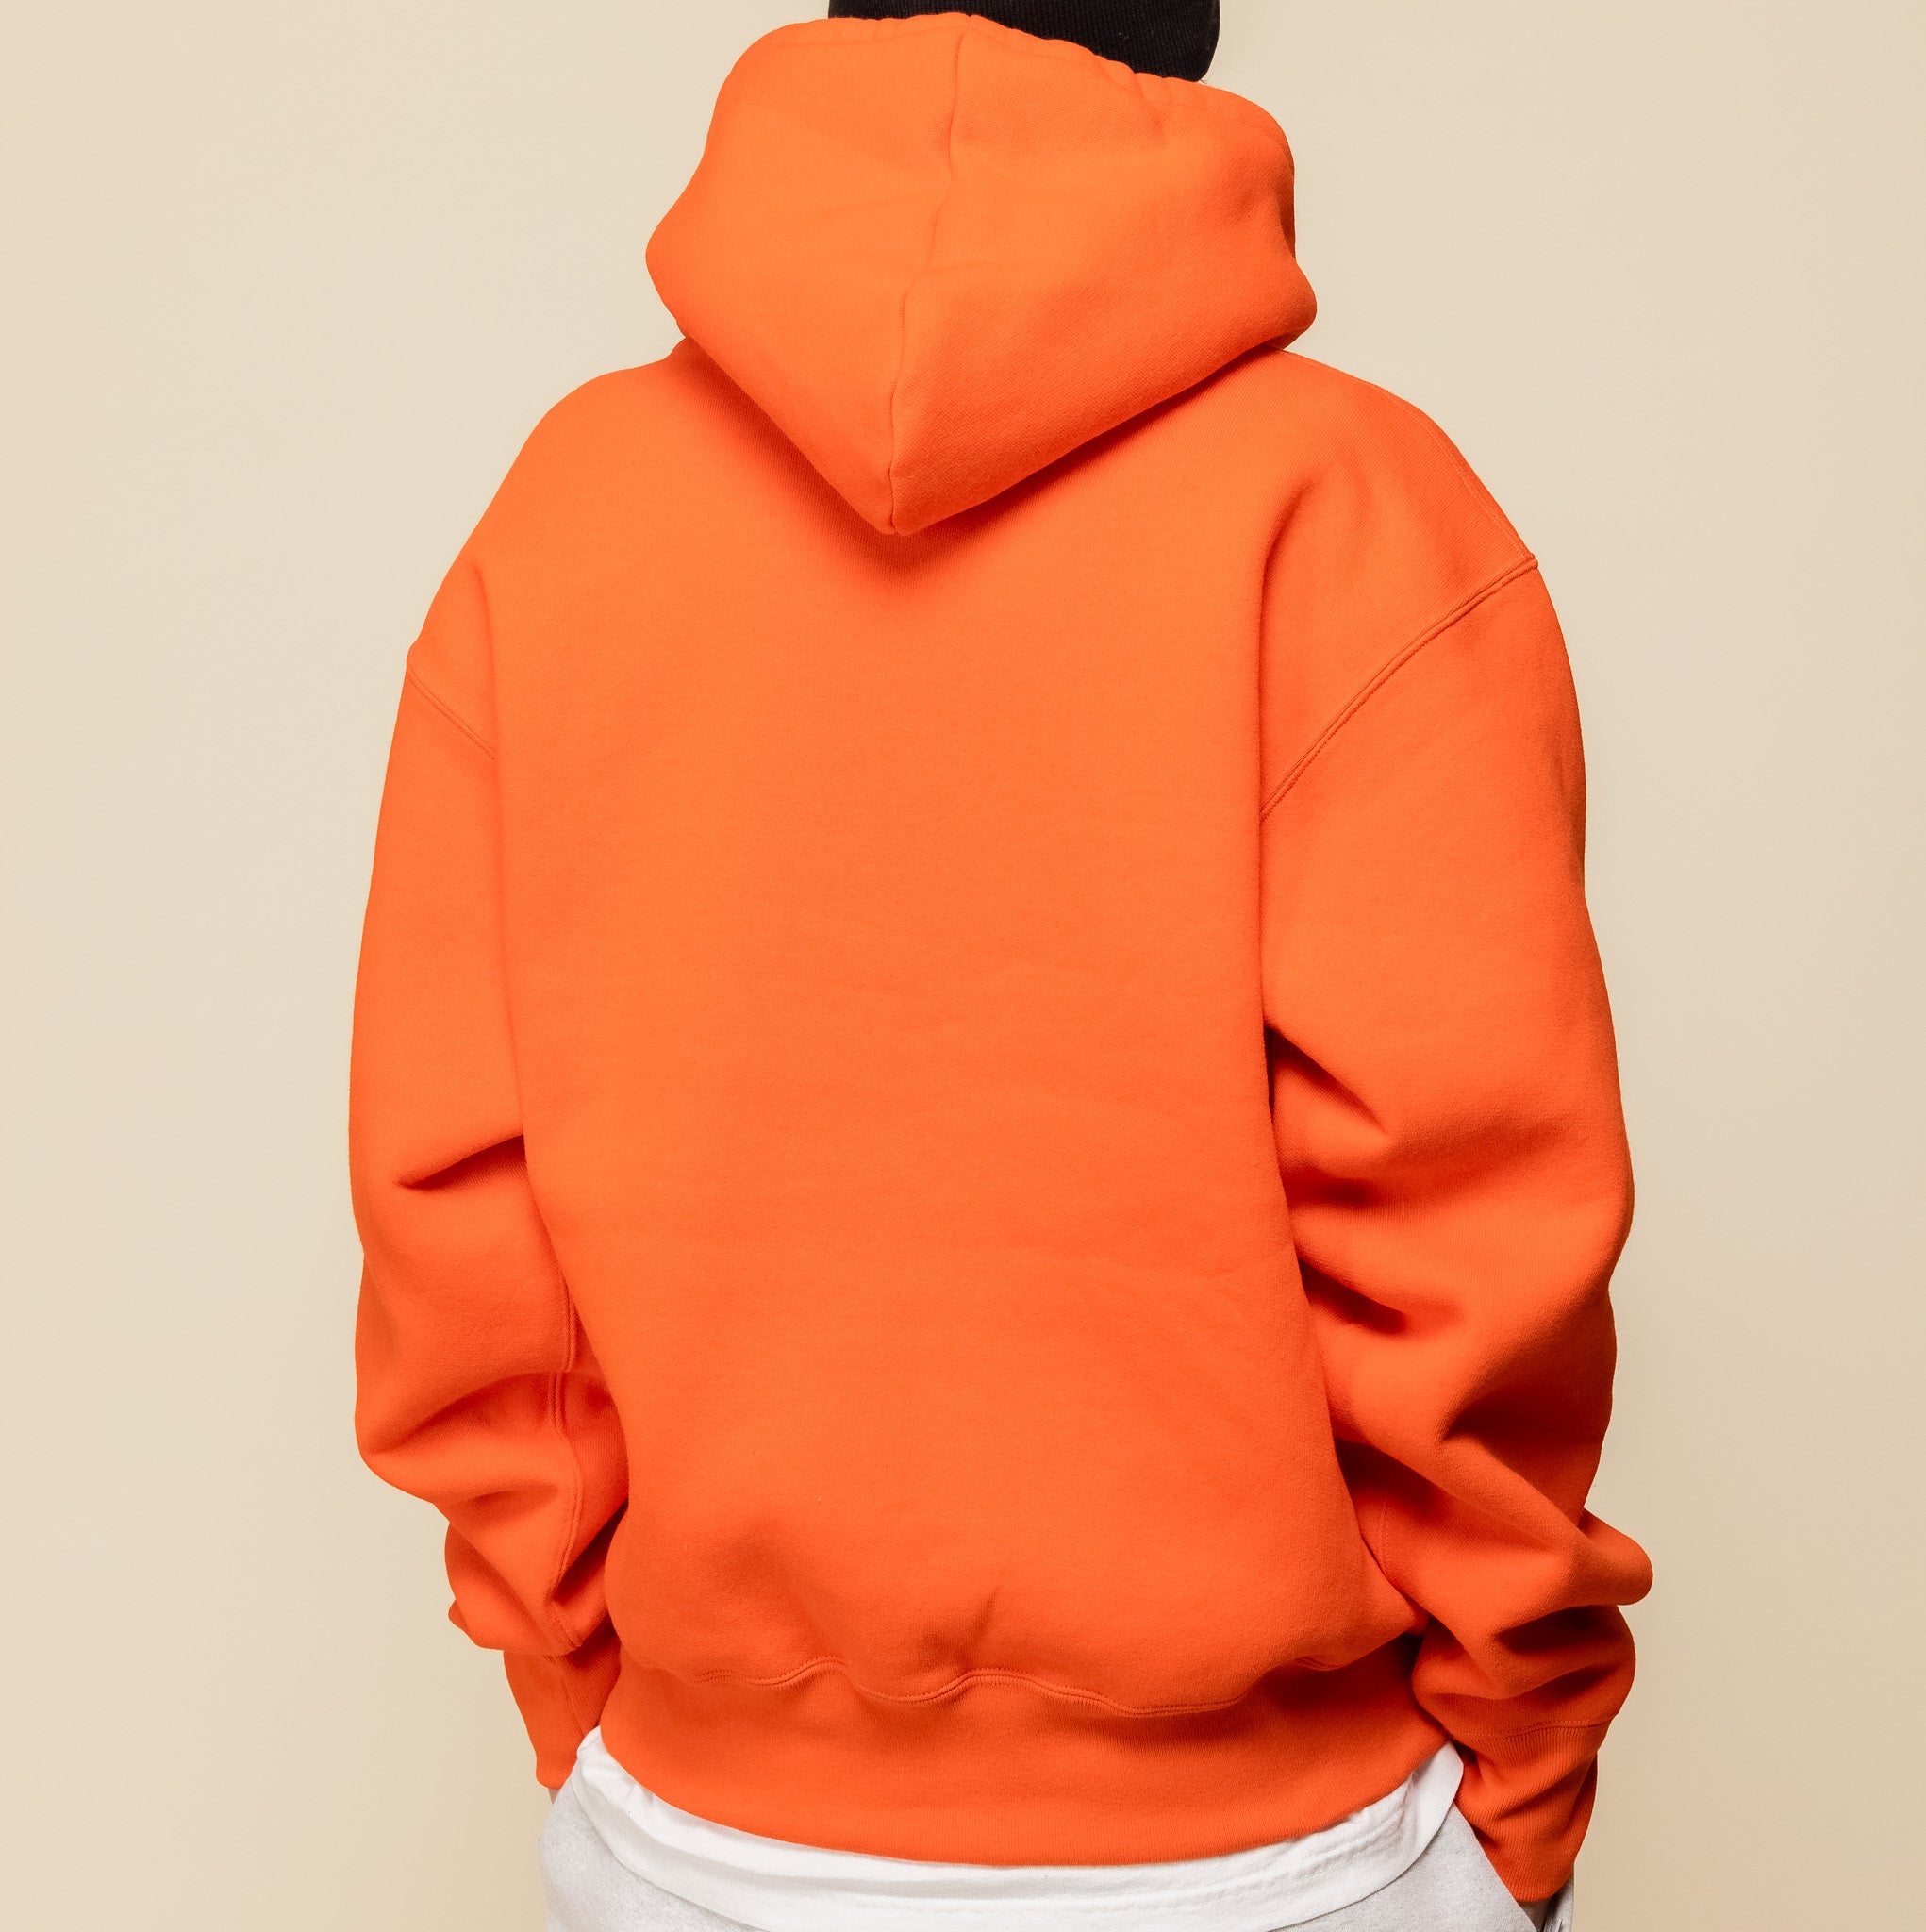 Cease - Afterhood Sweatshirt - Outdoor Orange "ceaseceasecease.com" "ceaseceasecease" "cease stockist" "dan pacitti"